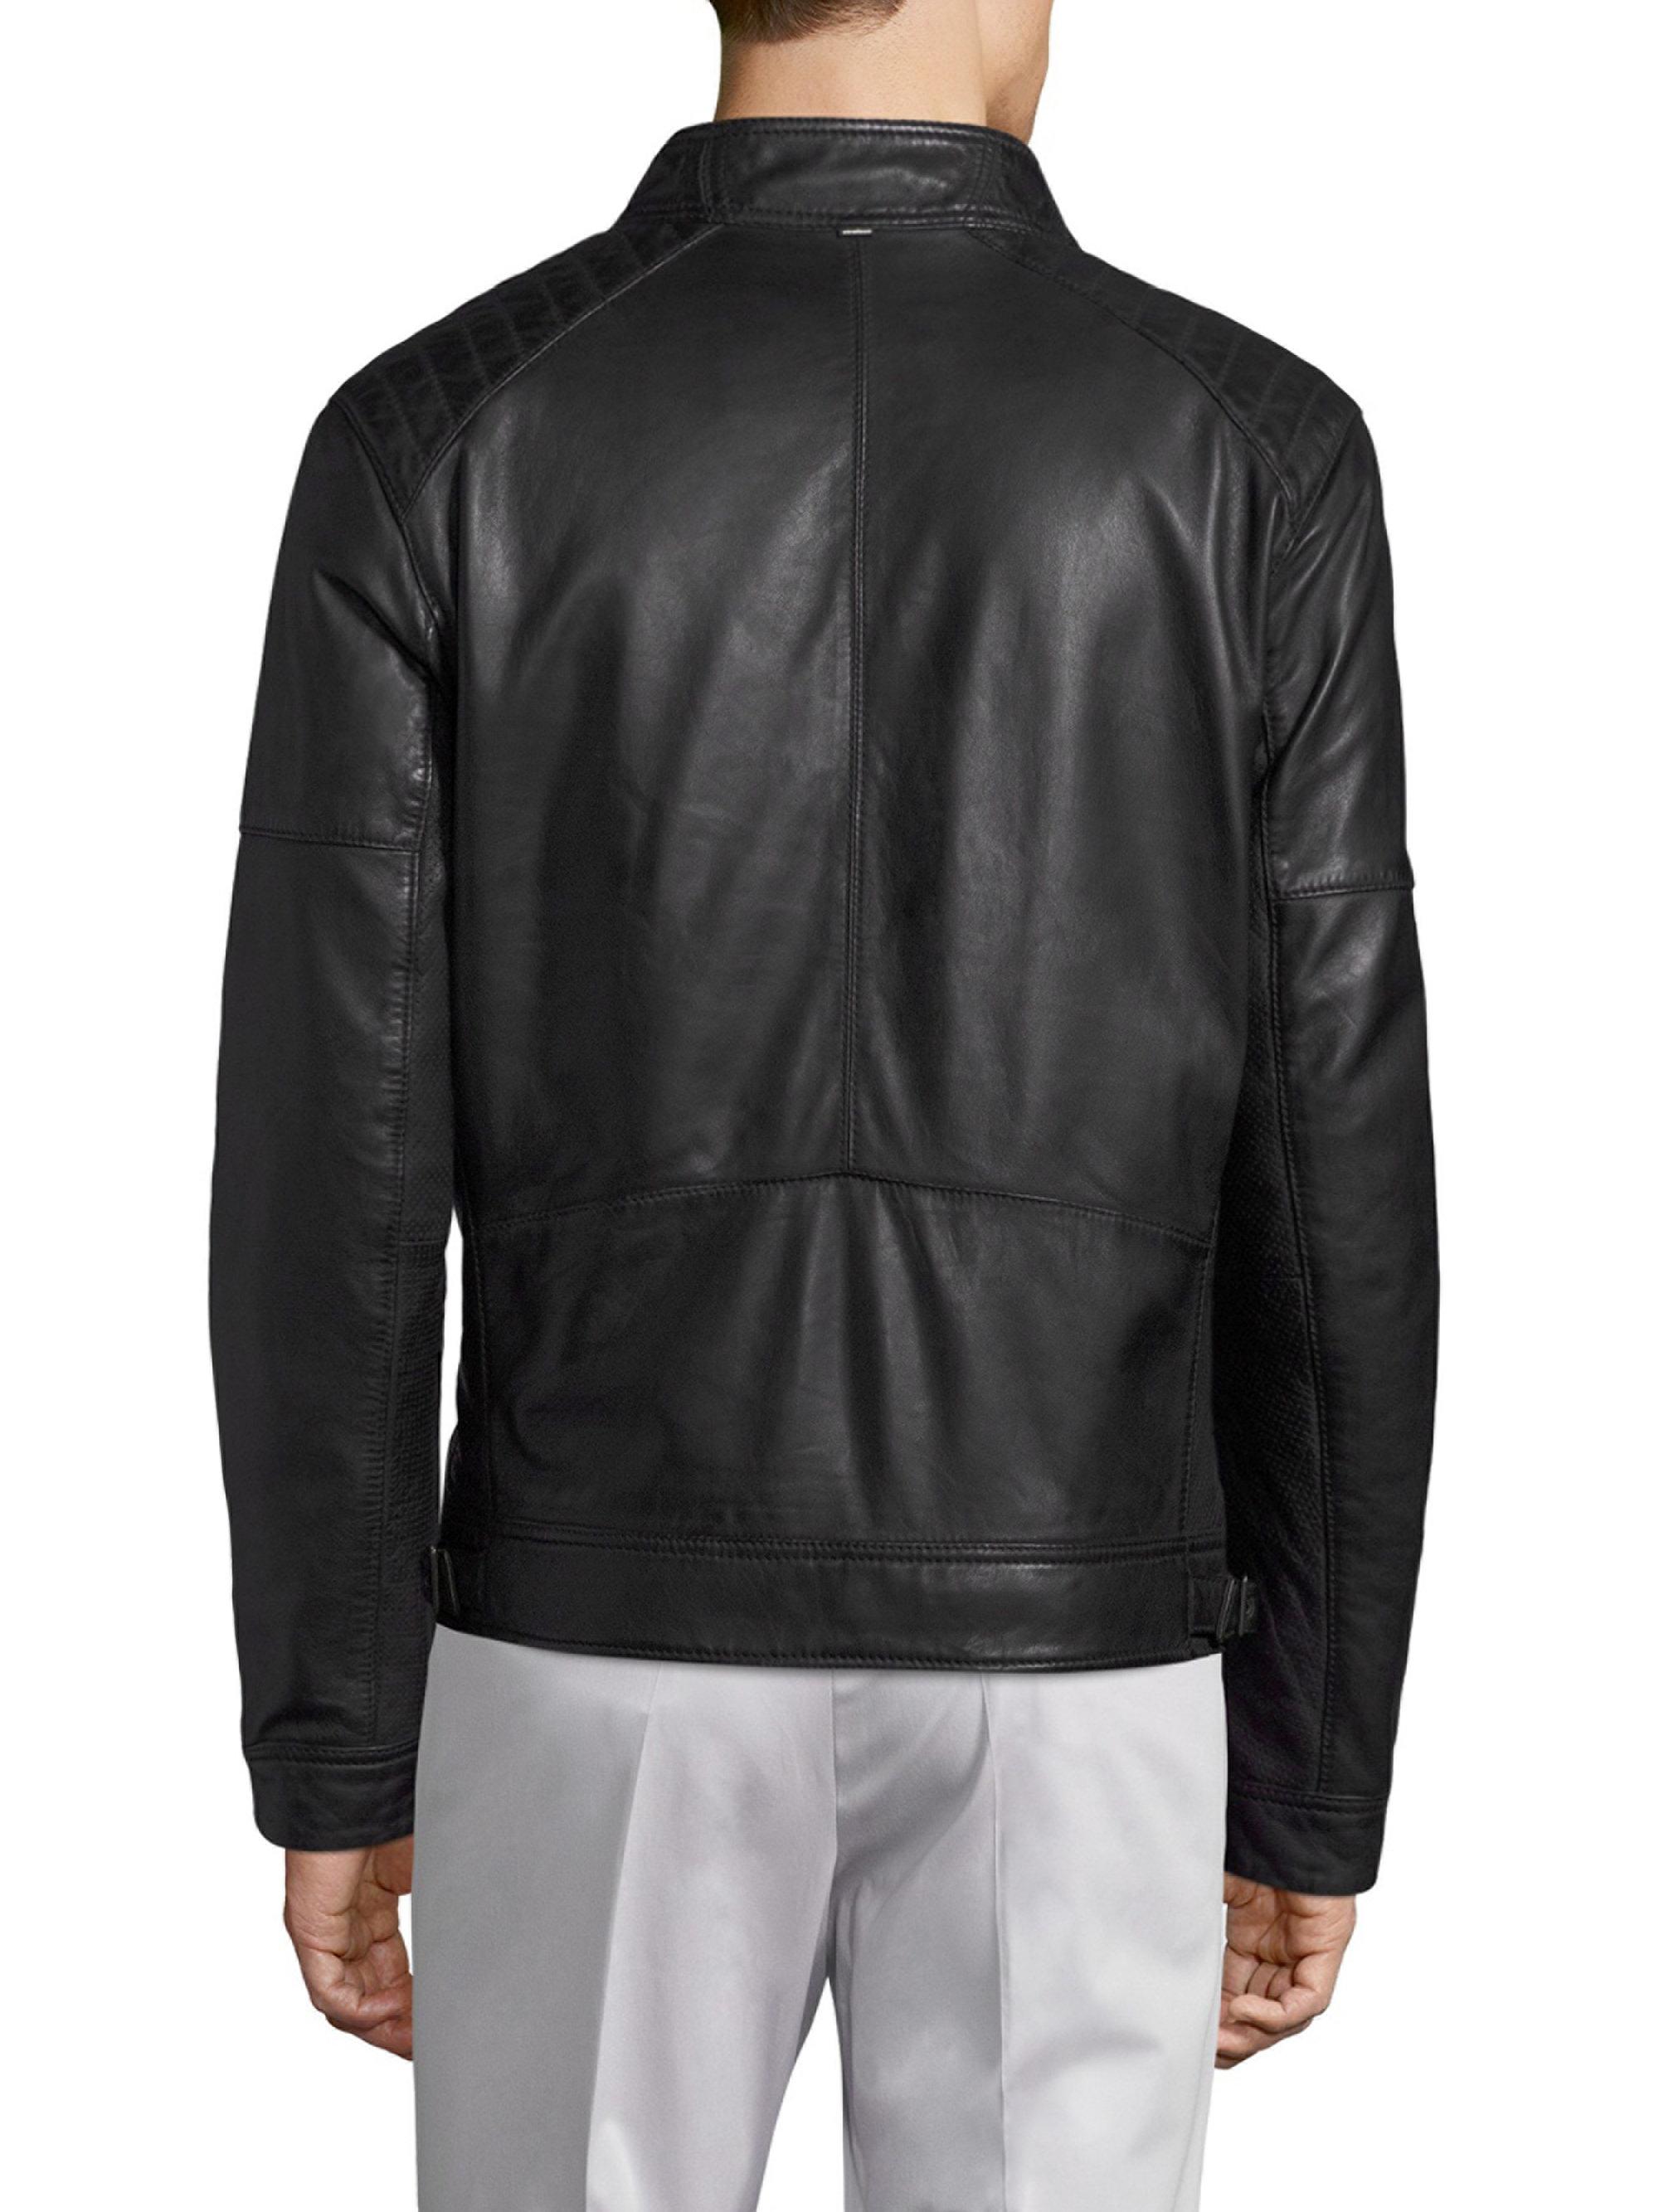 Vlieger geur Gek Strellson Shield Perforated Leather Jacket in Black for Men - Lyst